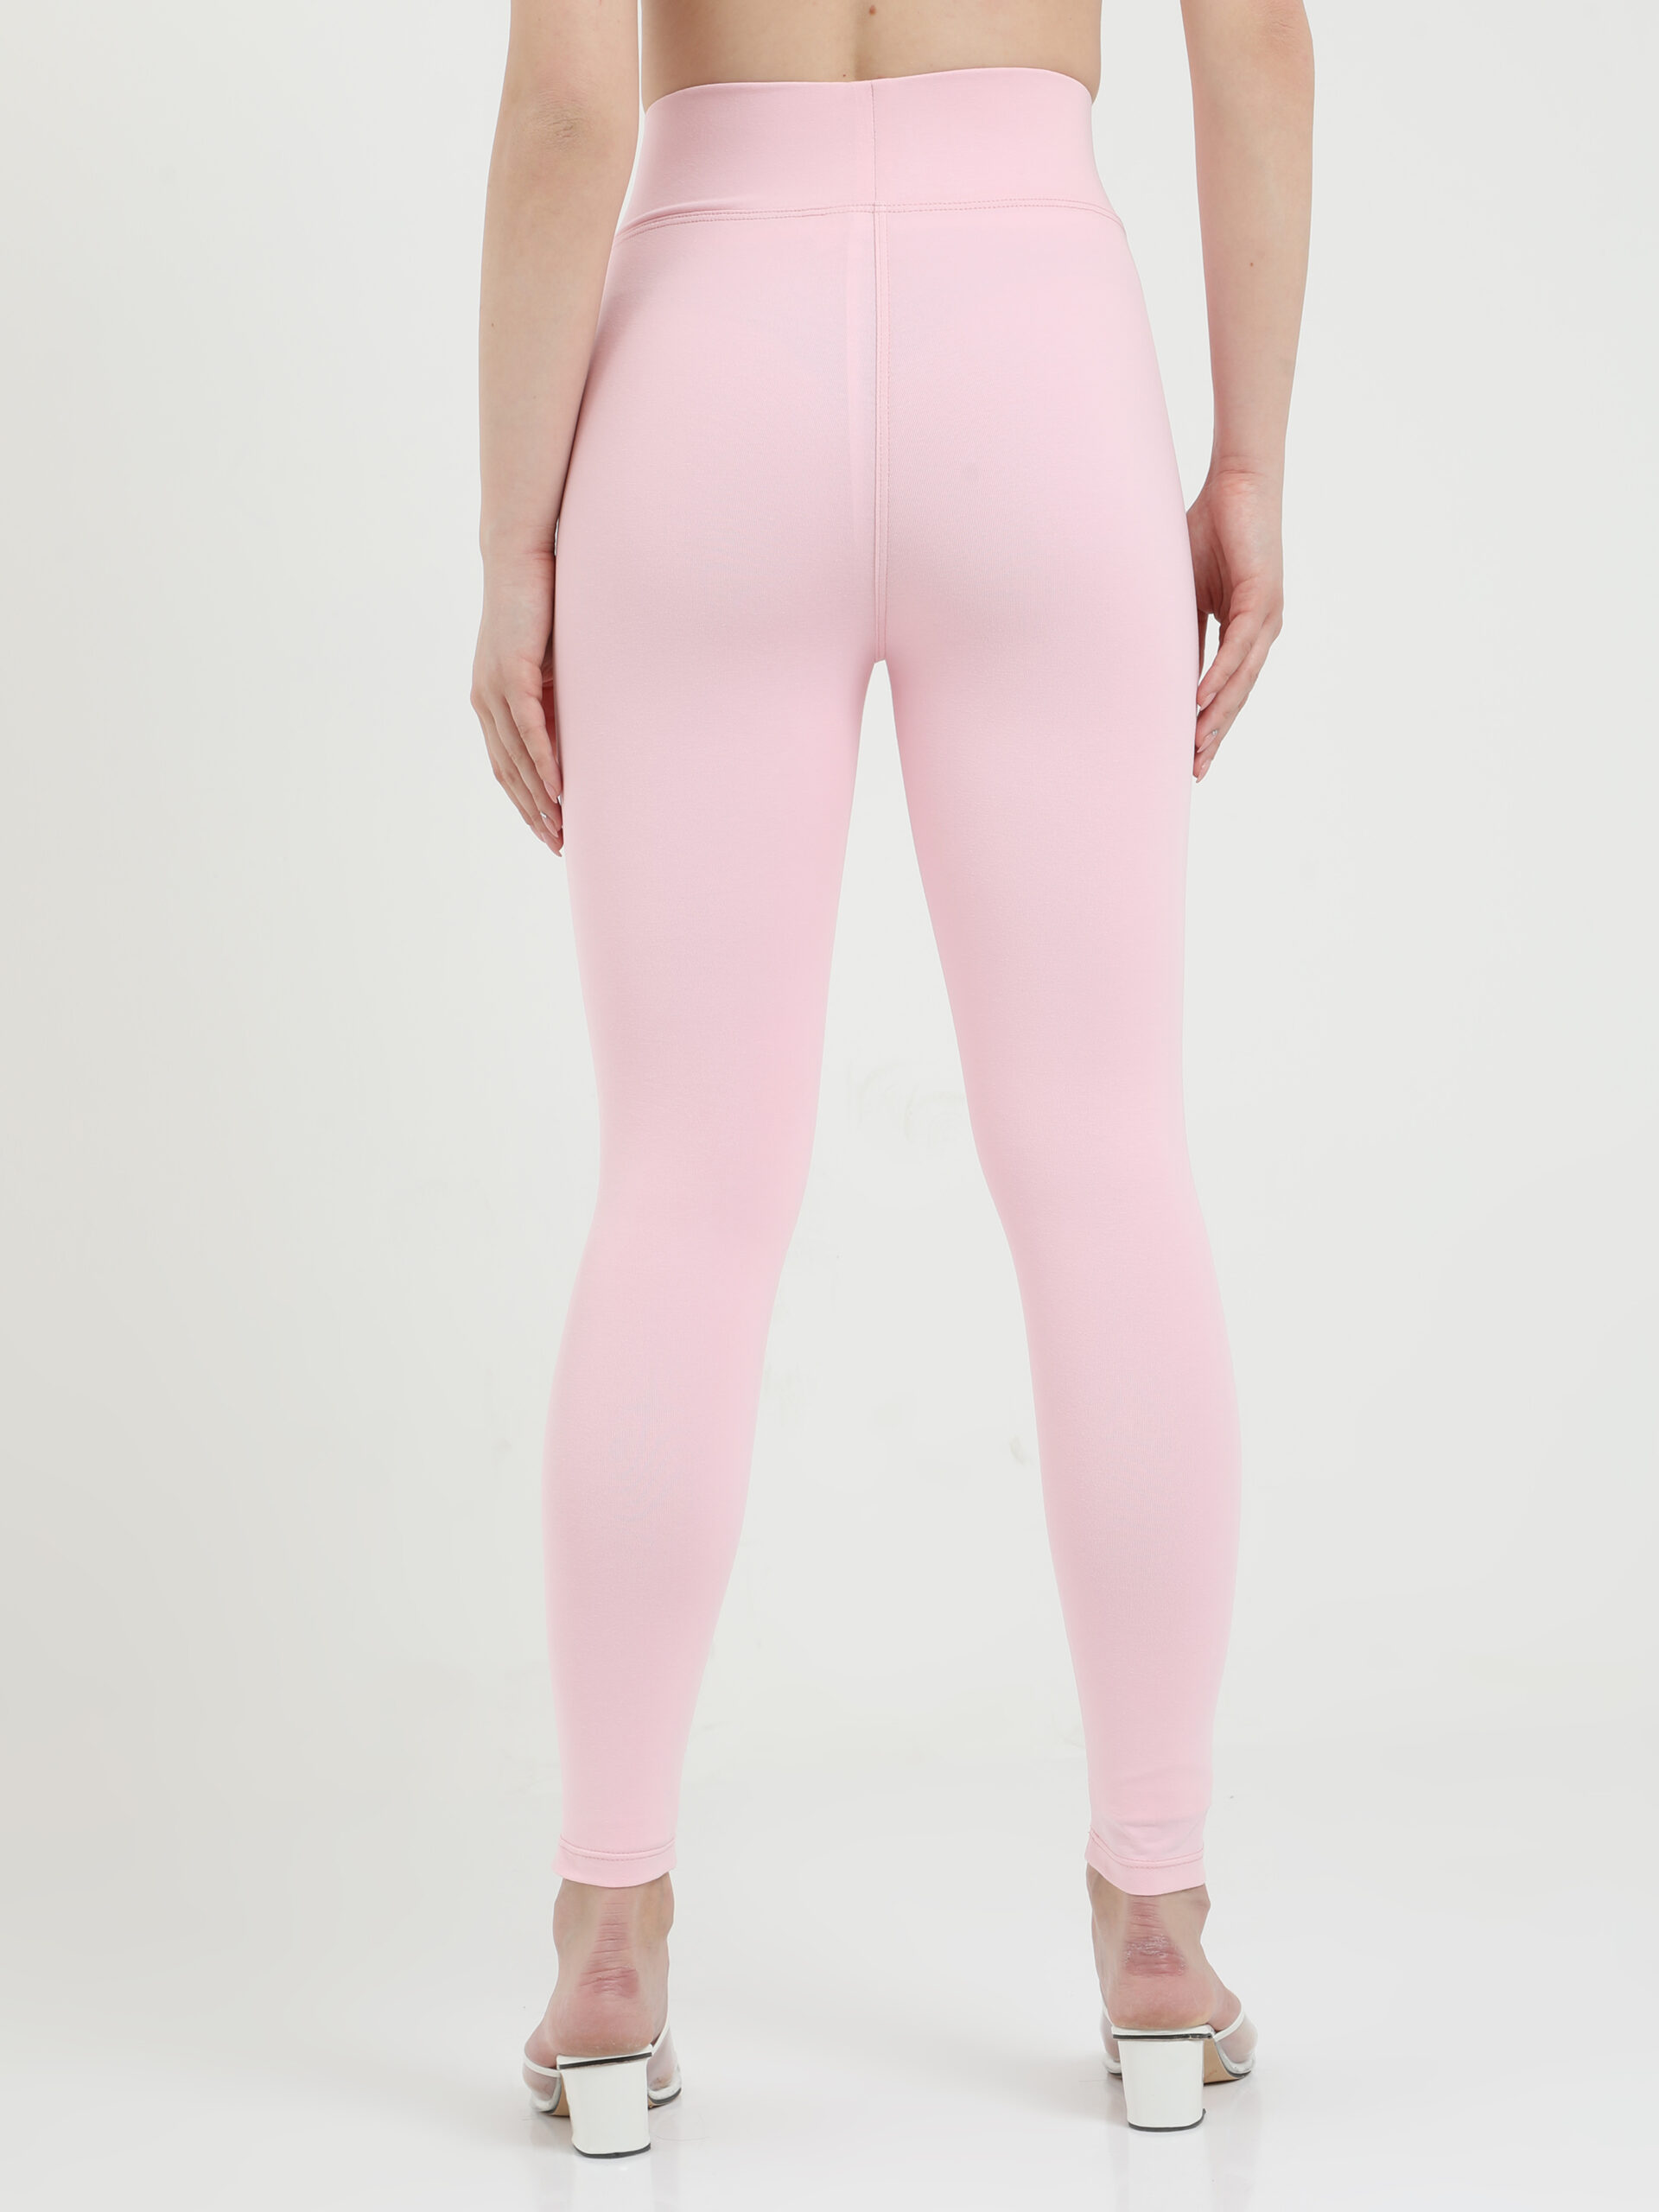 Hue womens pull on pink leggings, cut out design on bottom of legs size  Medium | eBay